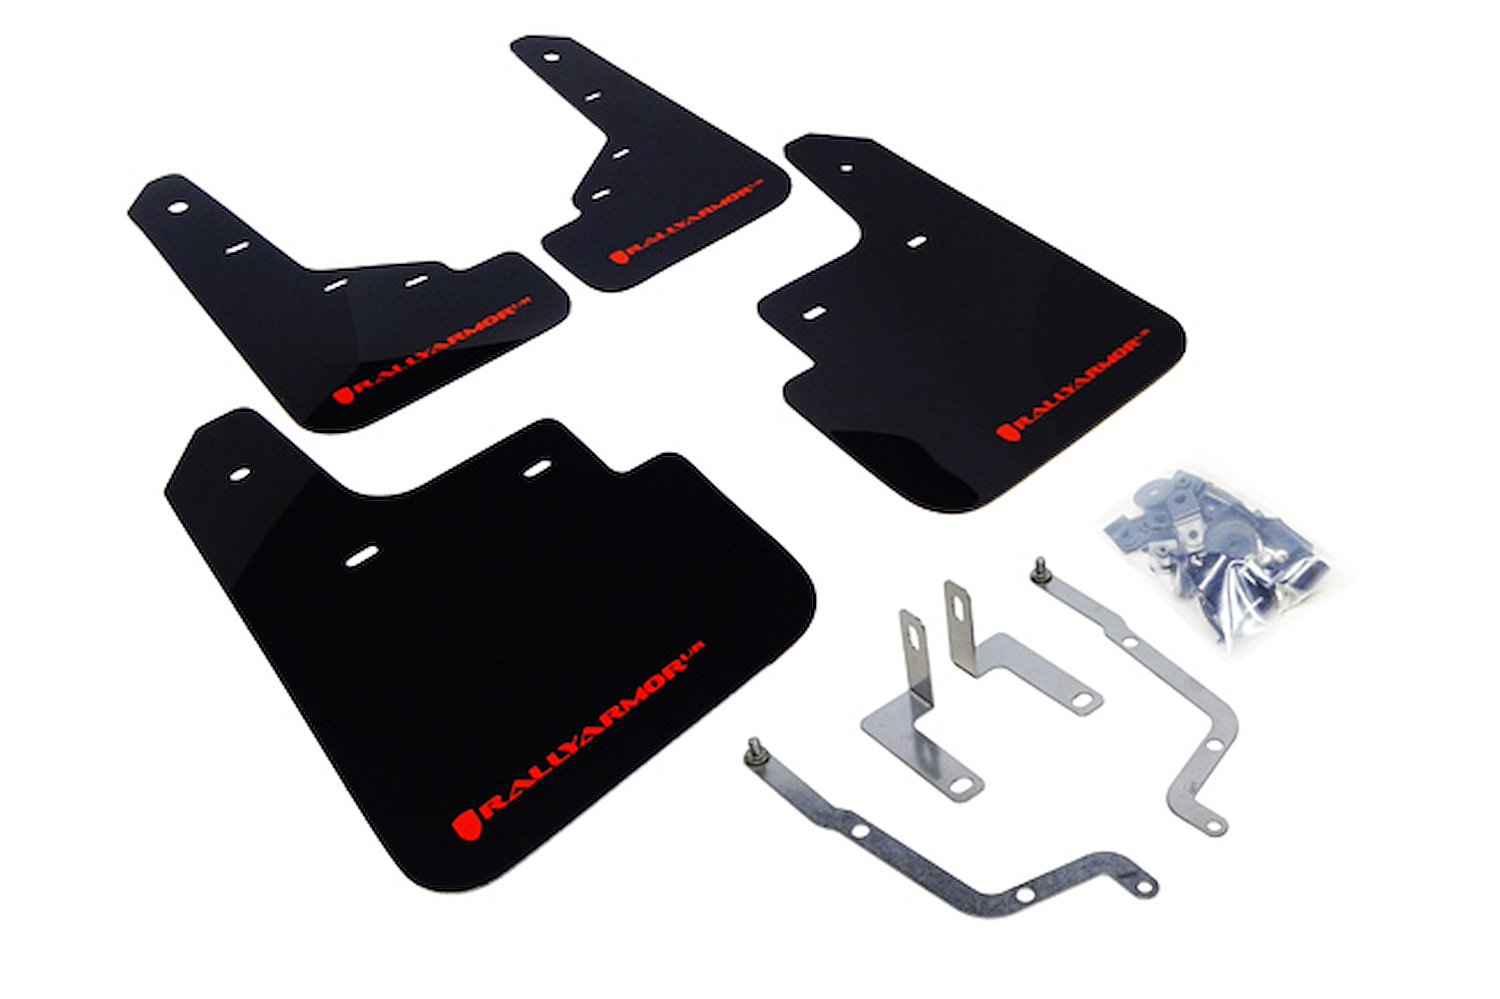 MF31URBLKRD Mud Flap Kit for 2014-2018 Mazda 3 Grand Touring, Sport, SV, Touring - Red Logo